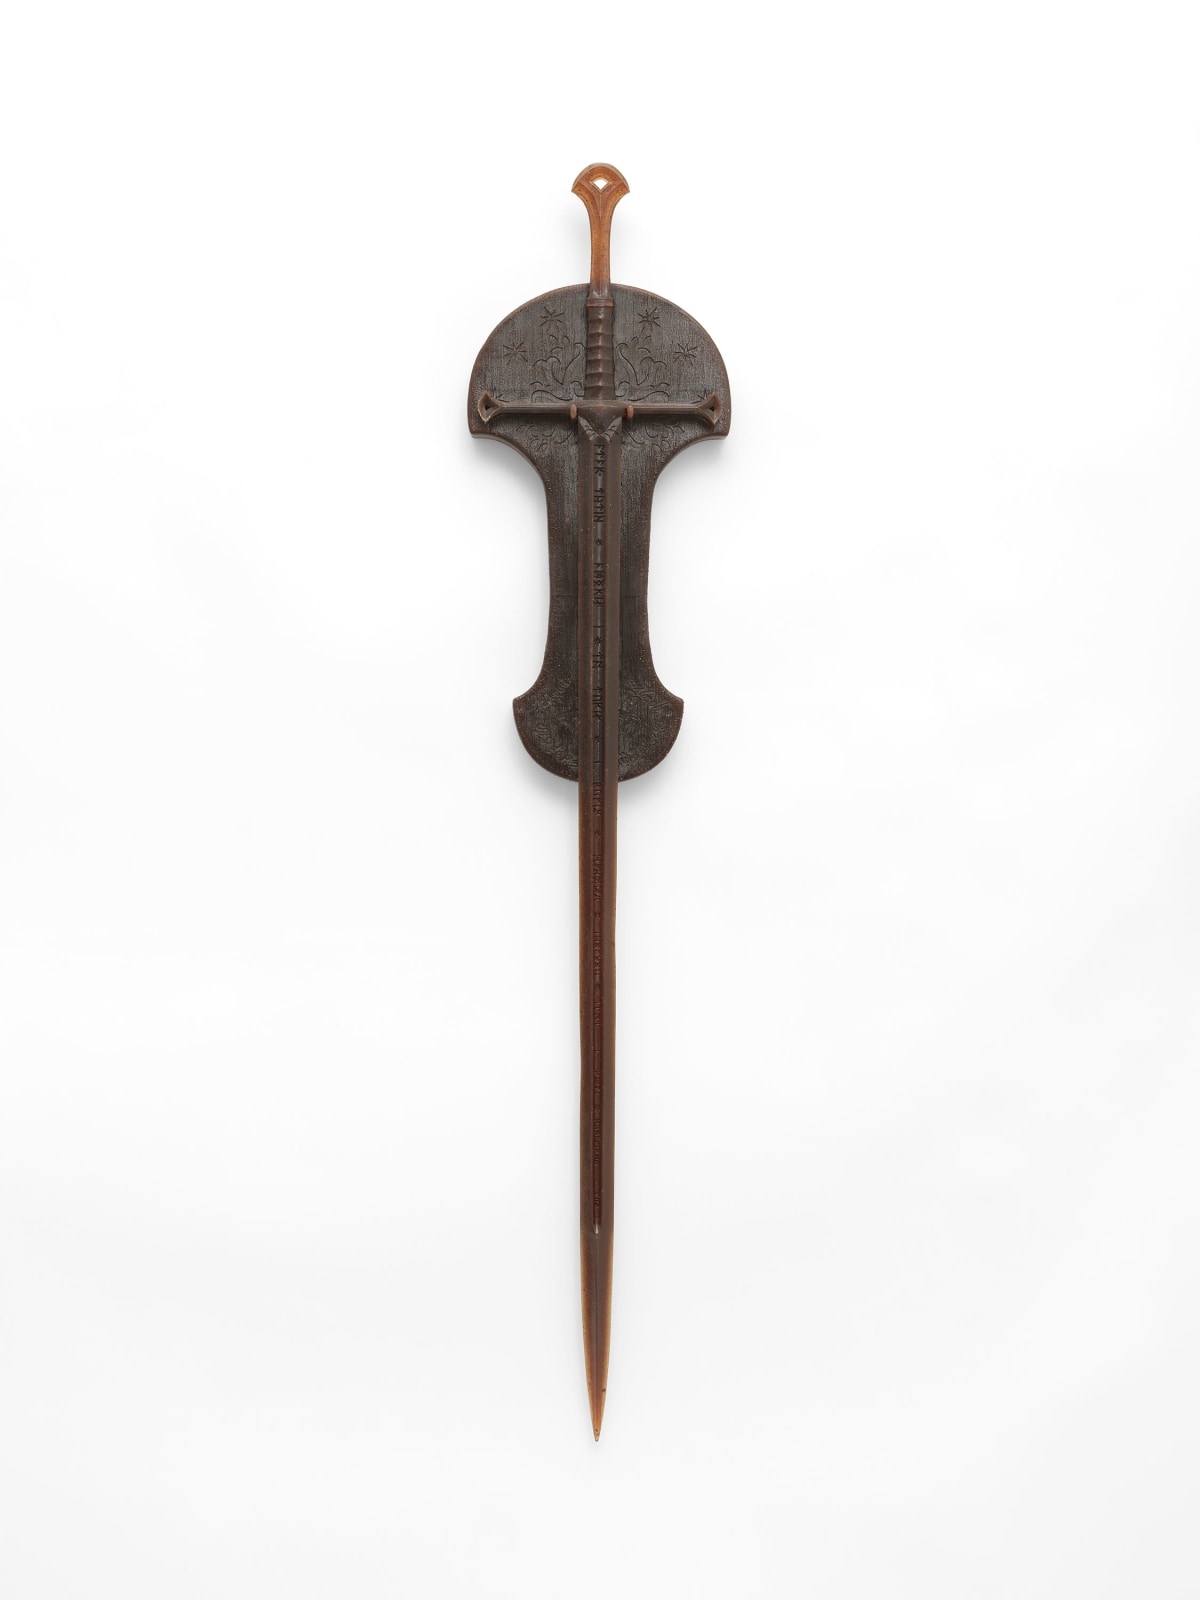 Simon Denny, Dungeon artifact 4: Palmer Luckey office display Anduril sword replica